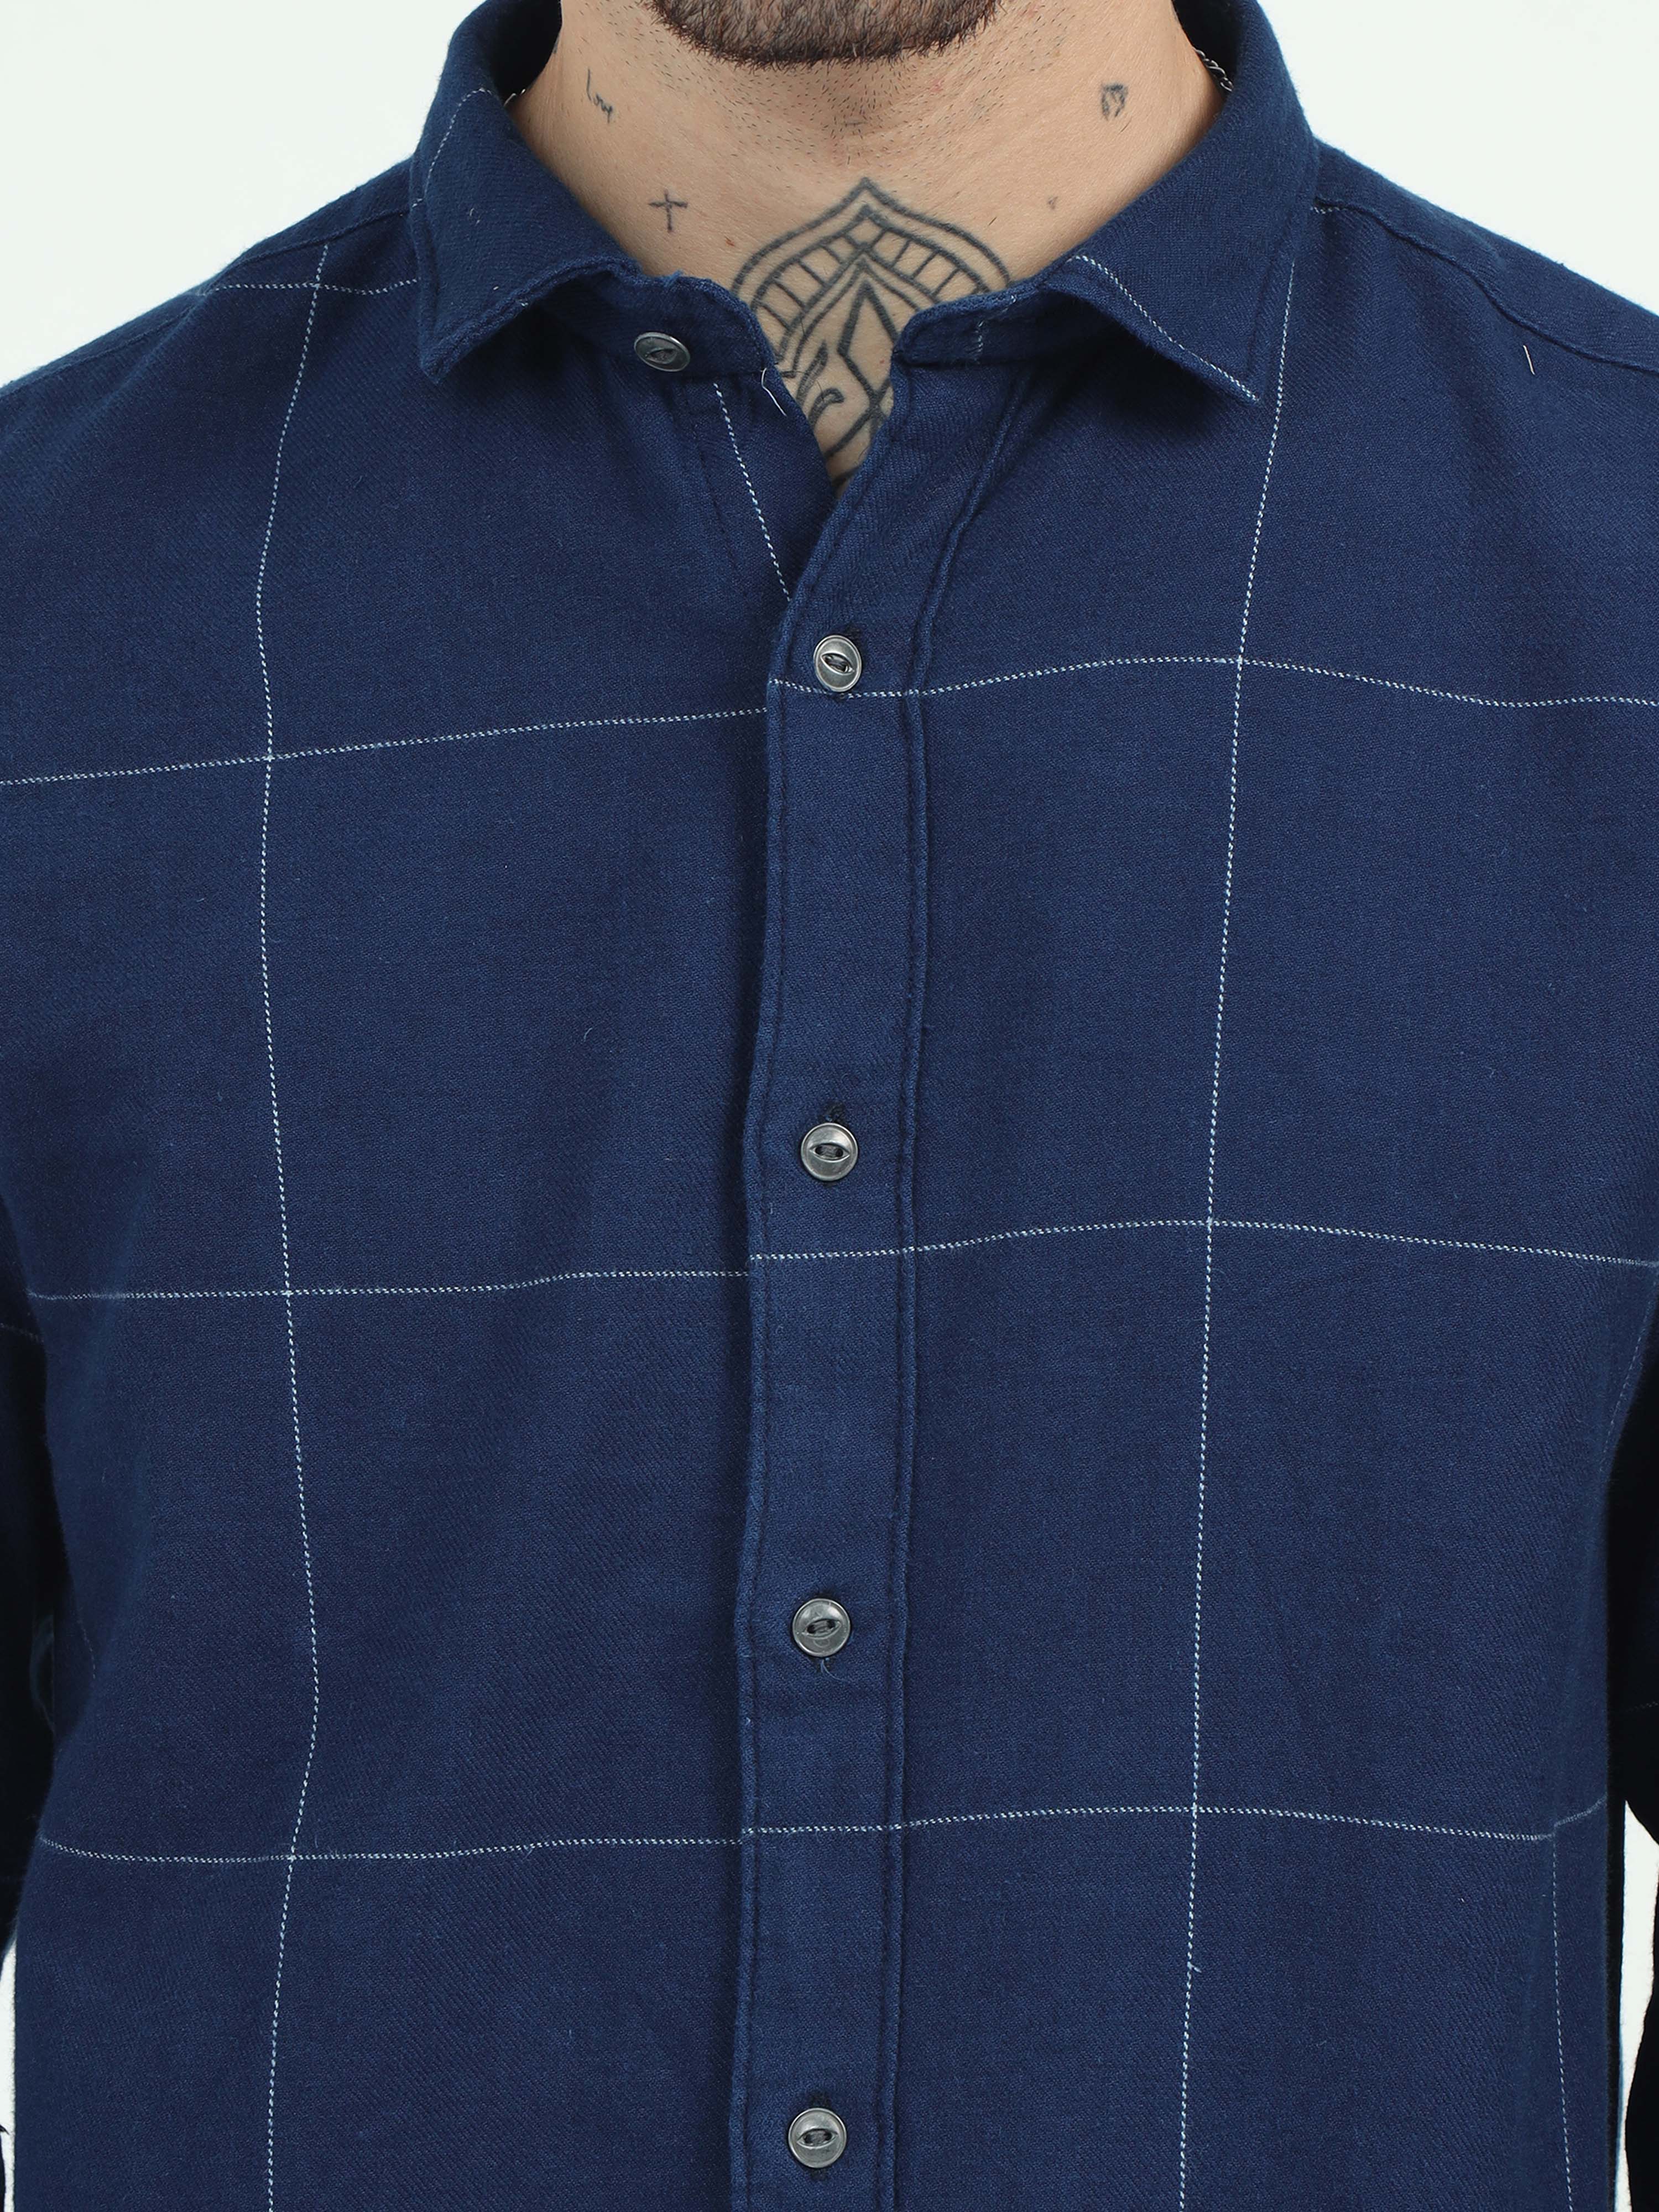 Bangalore Flannel Blue Shirt